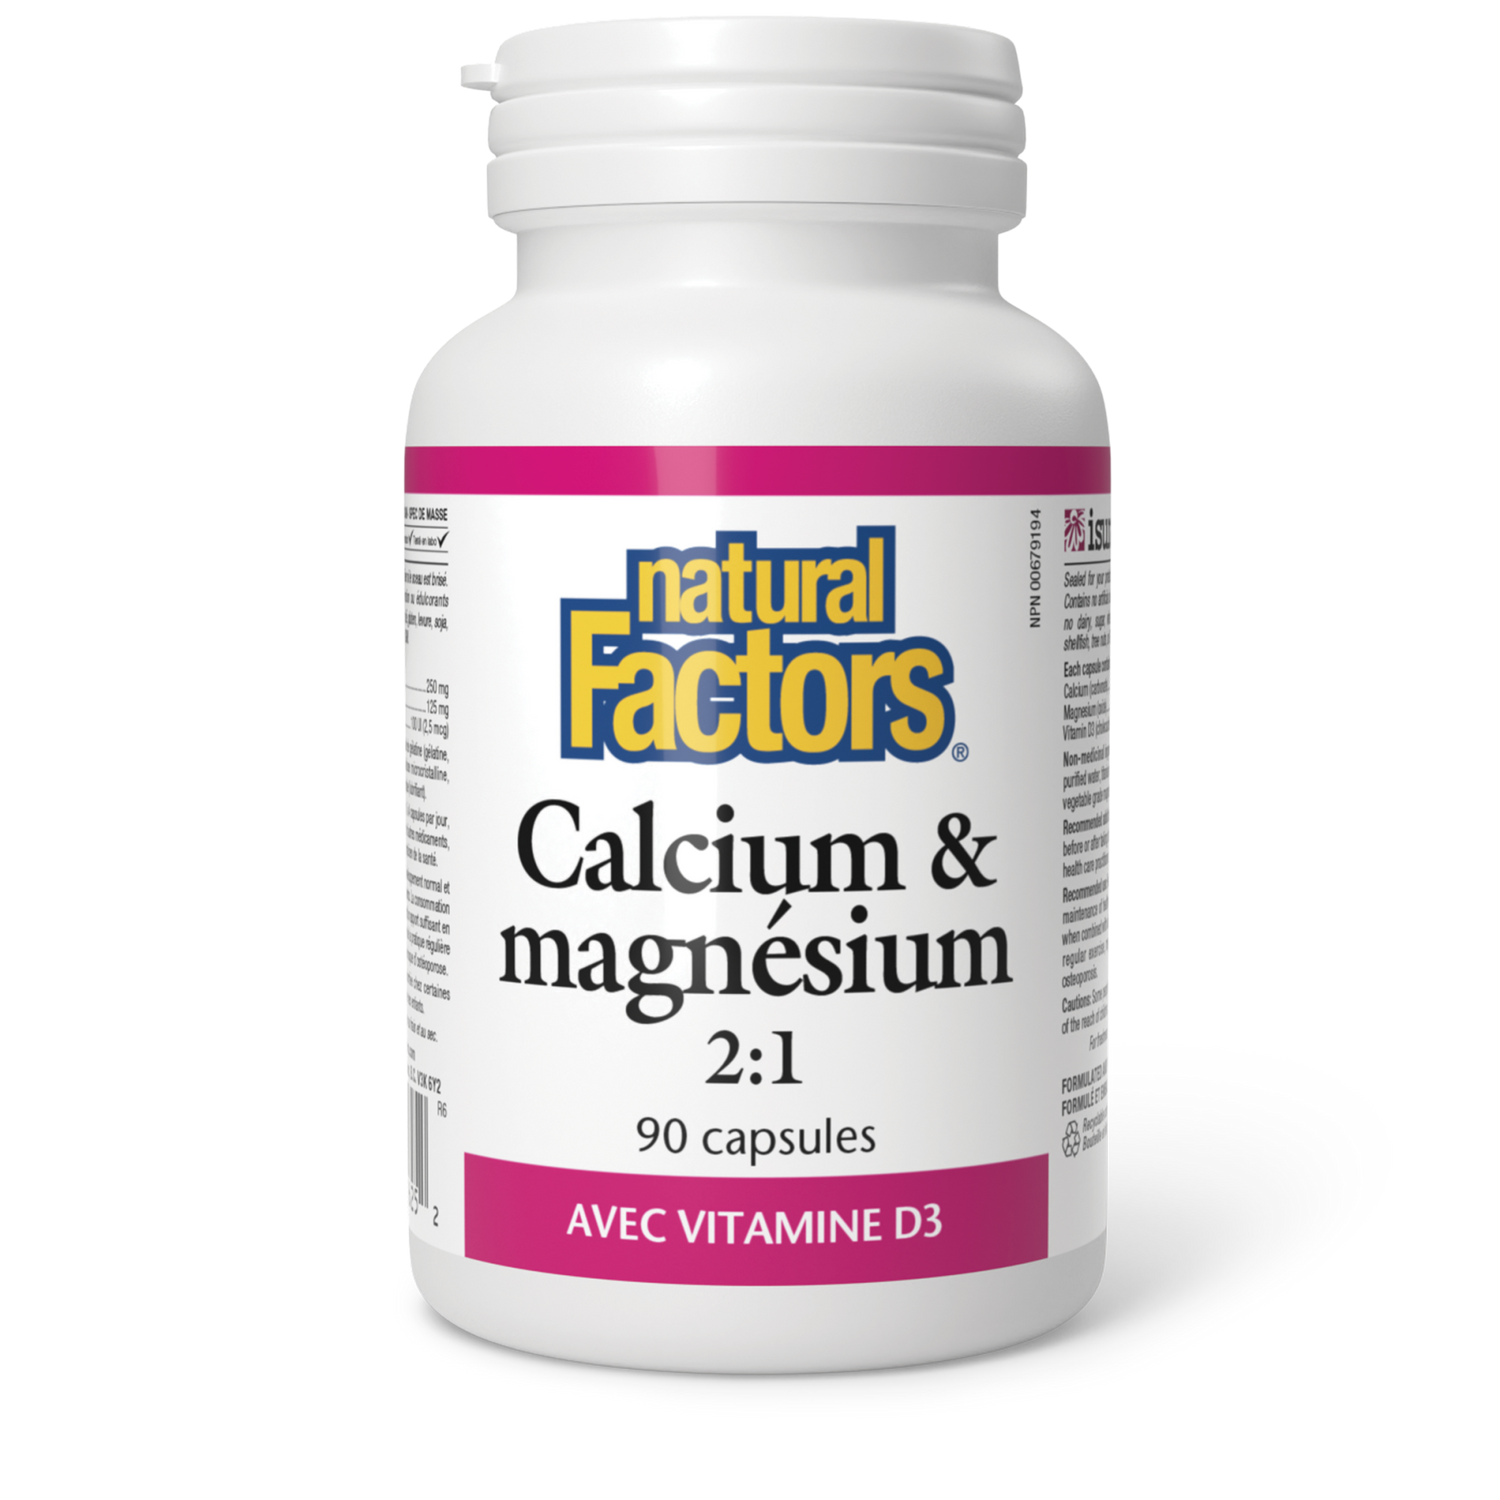 Calcium & magnésium 2:1 avec vitamine D3, Natural Factors|v|image|1625